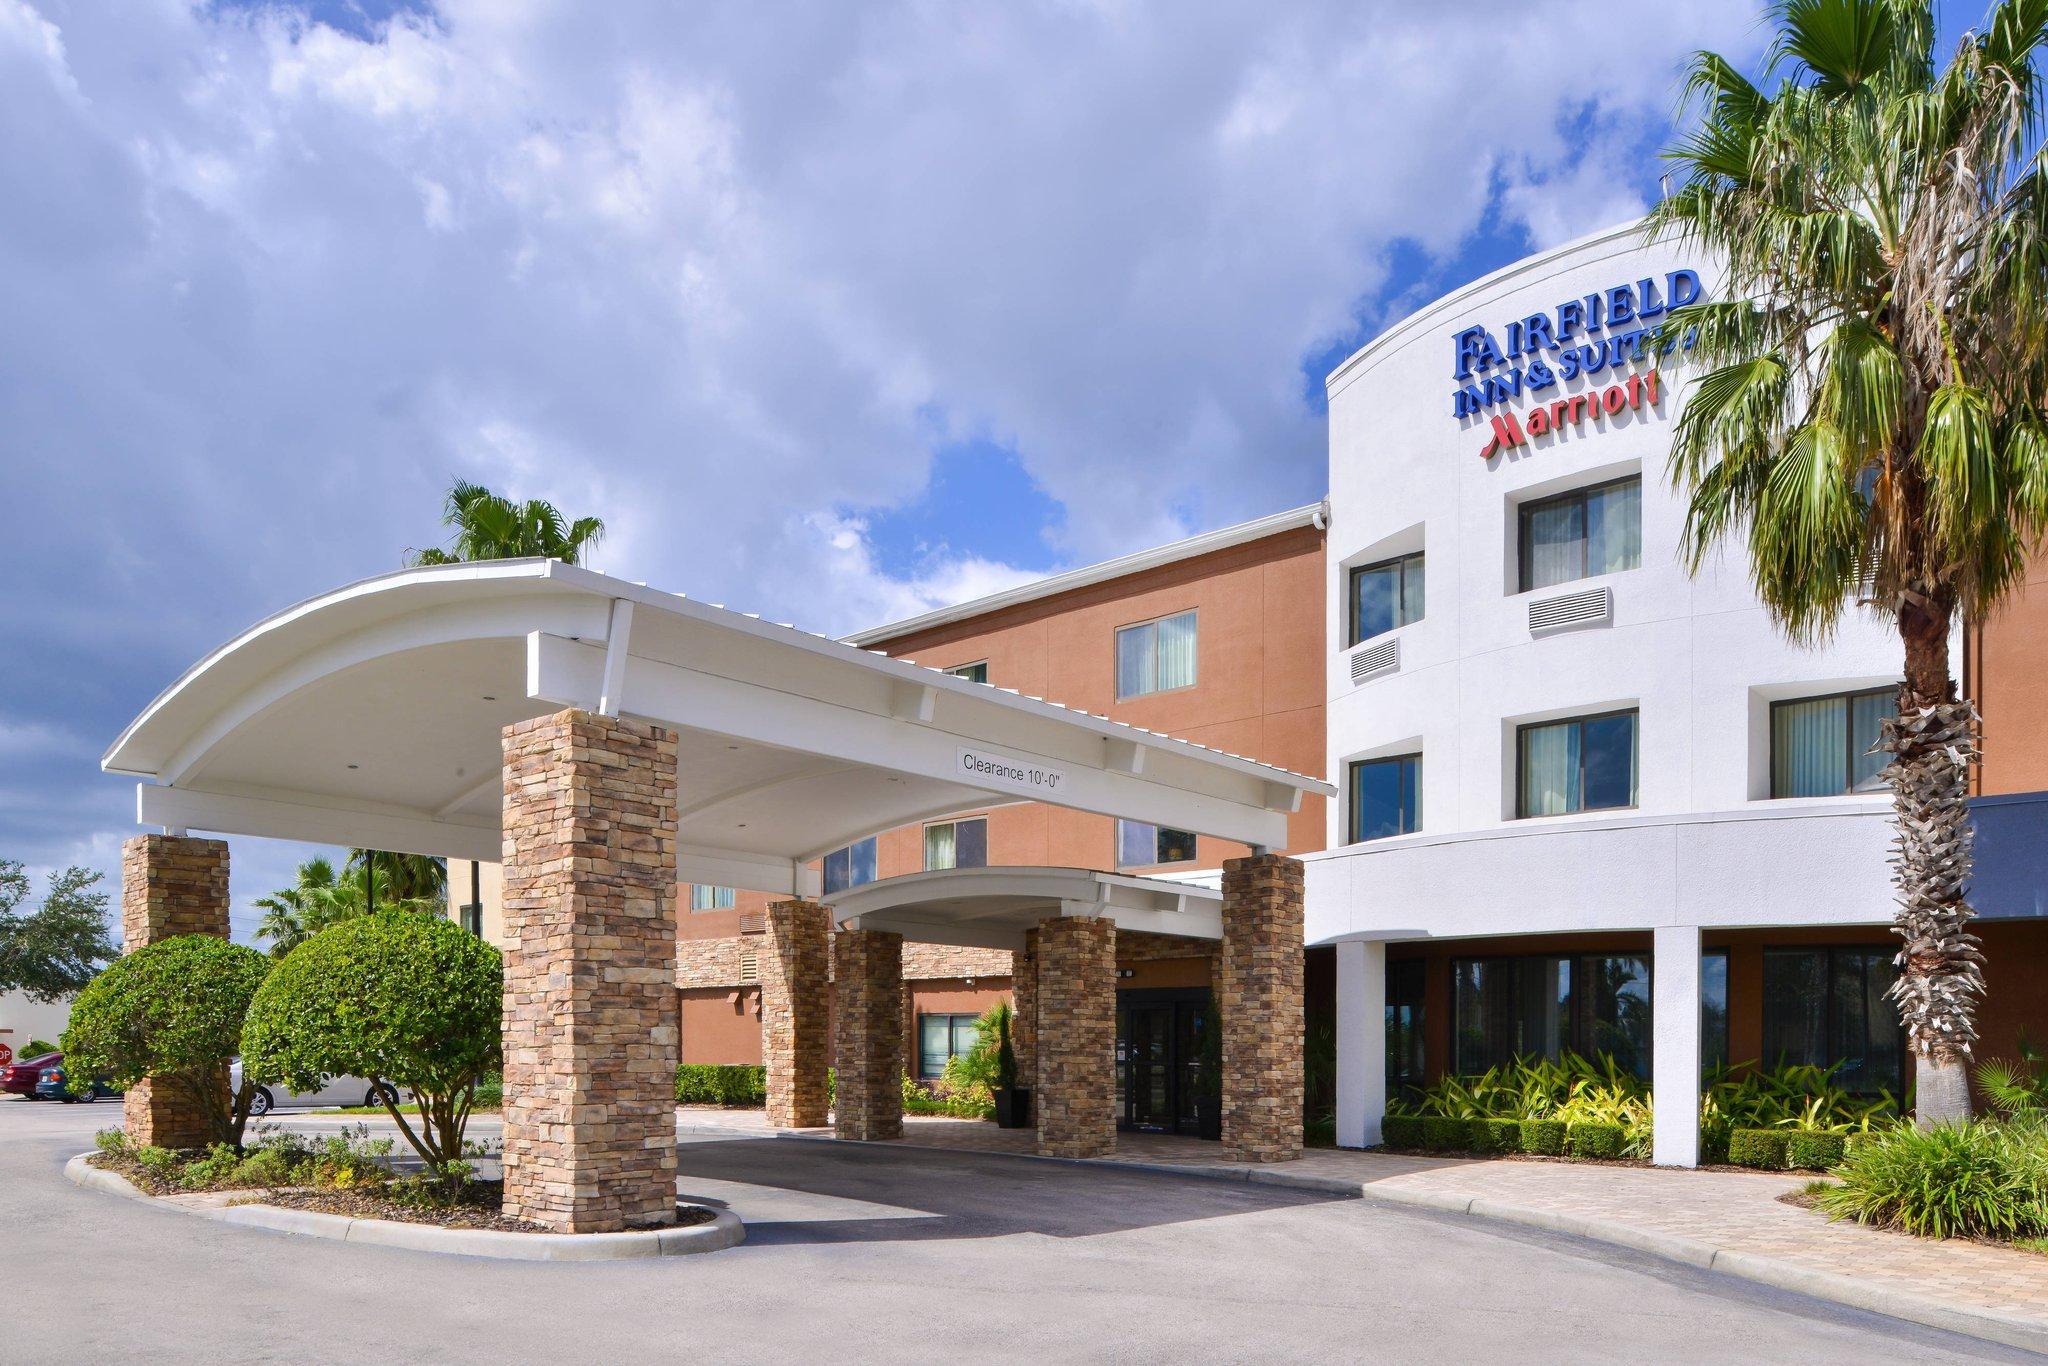 Fairfield Inn & Suites Orlando Ocoee in Ocoee, FL